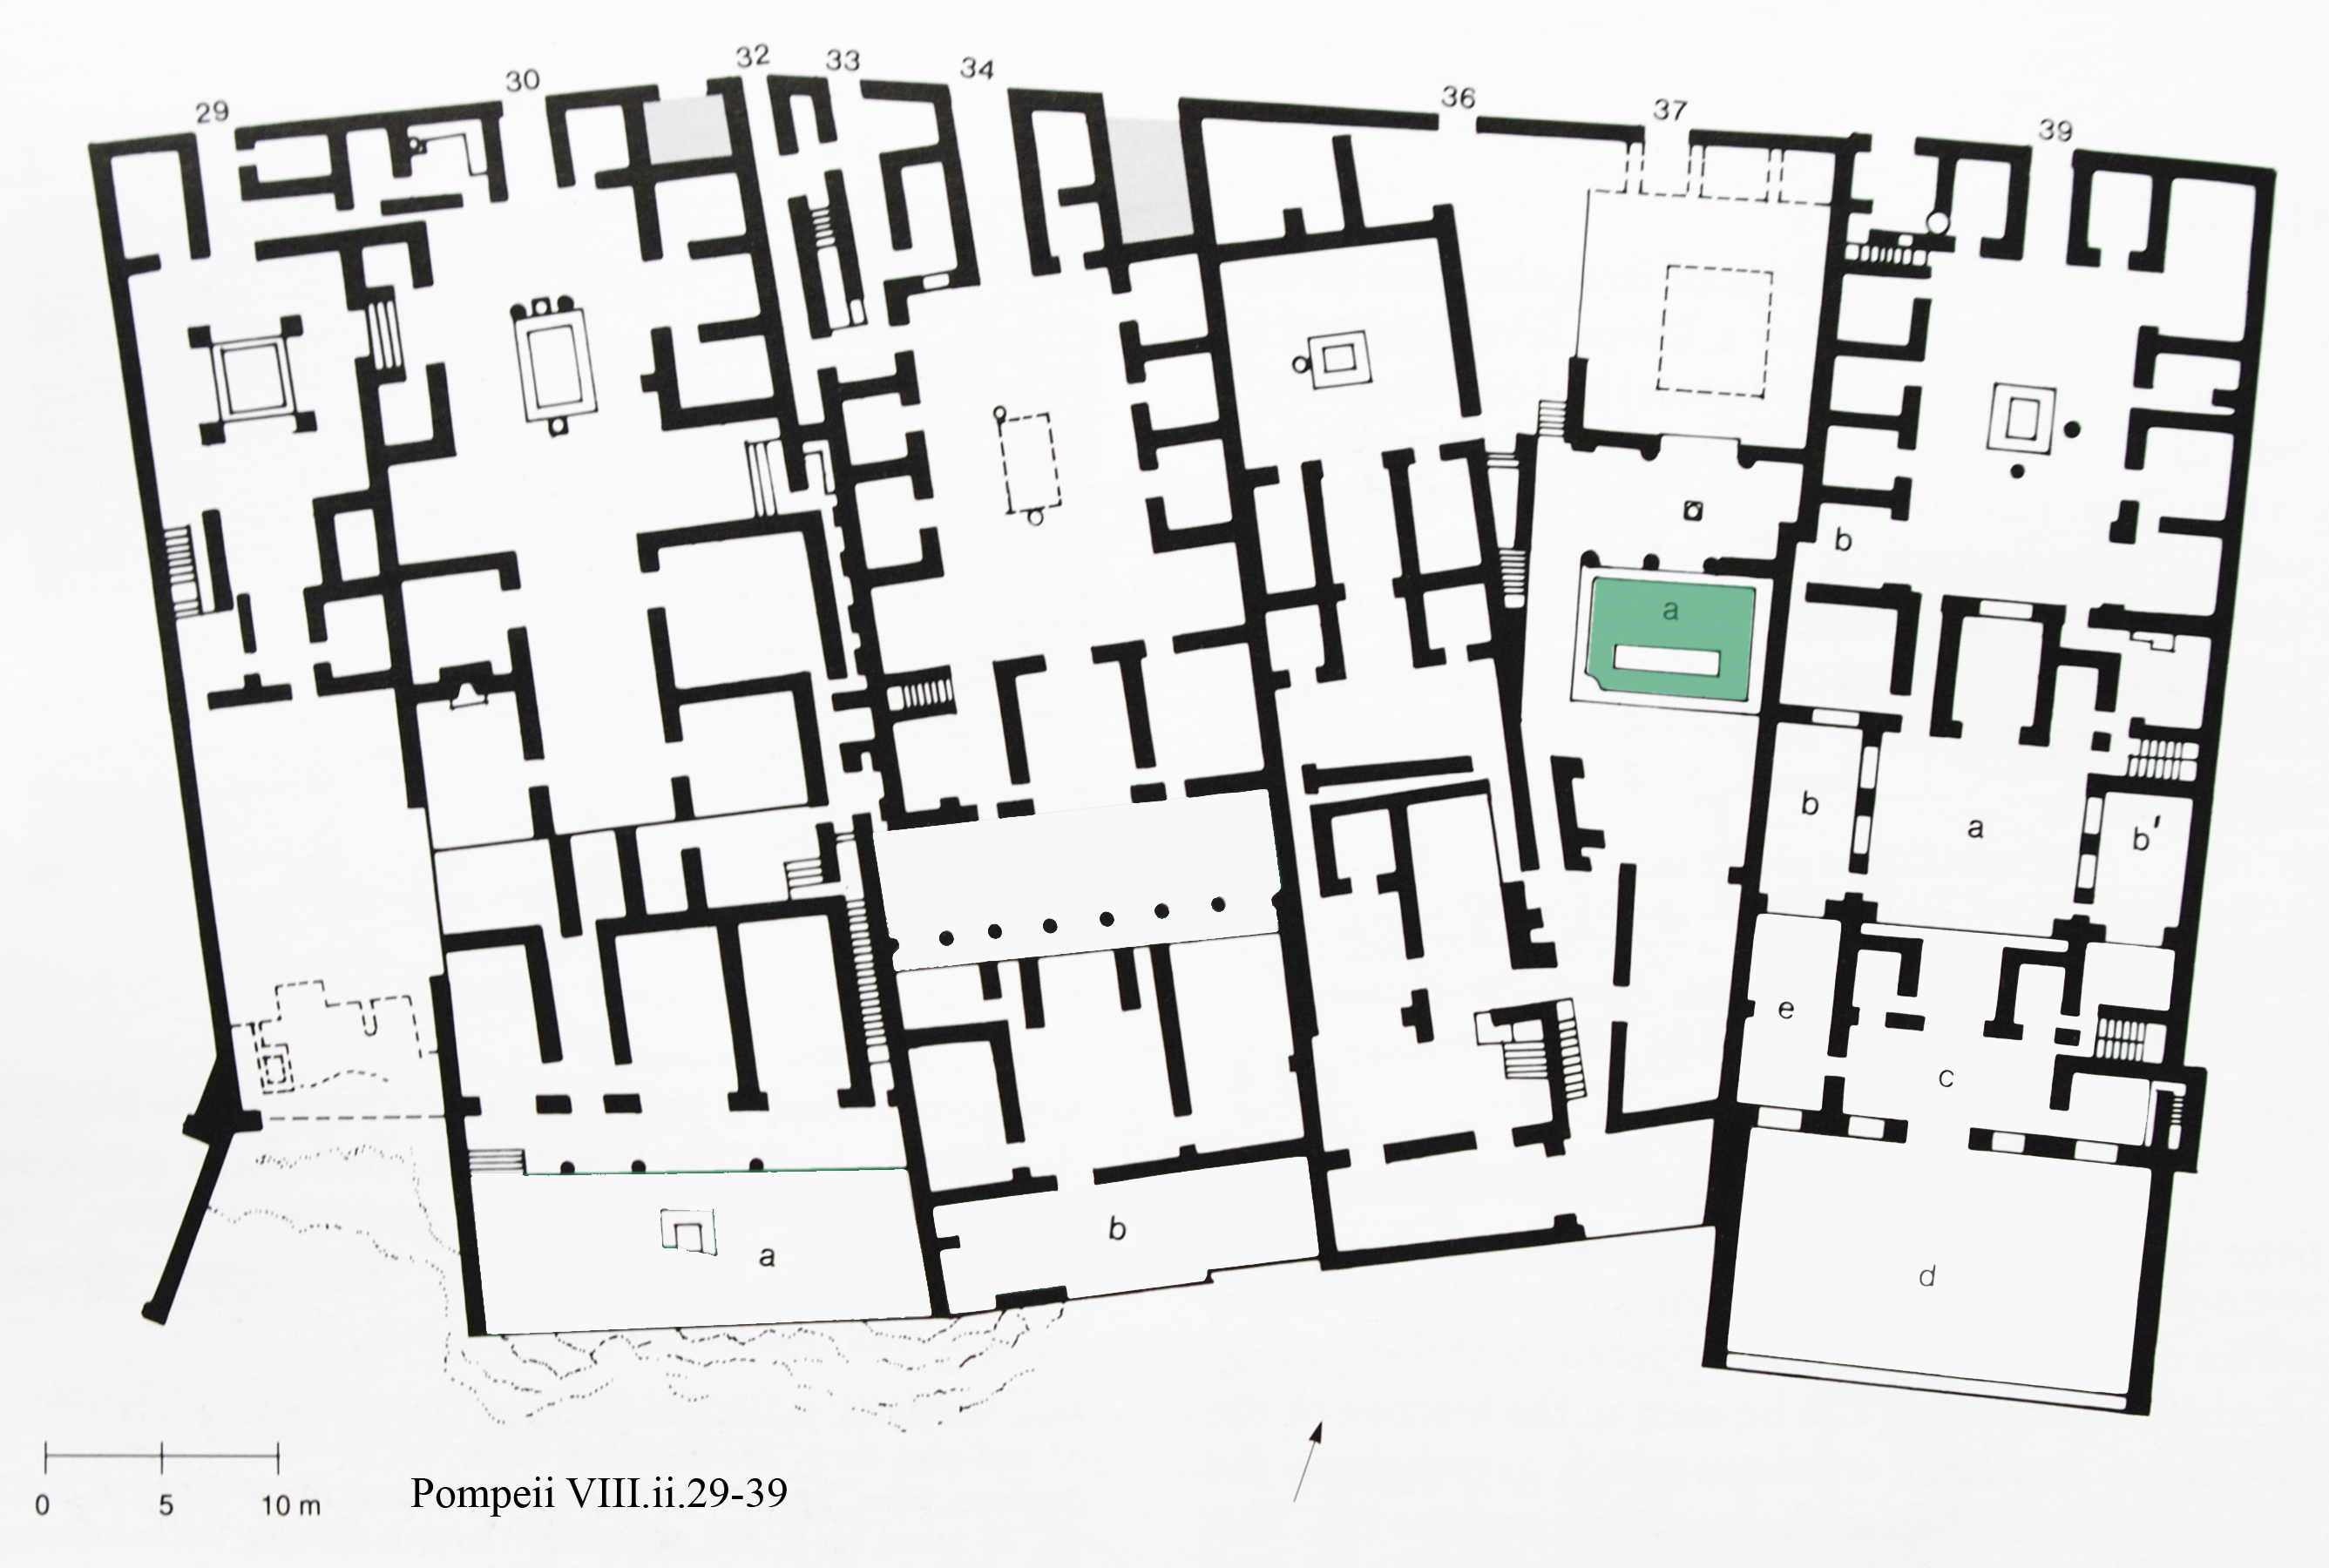 Plan of the Pompeii Region VIII, Insula II, 29-39